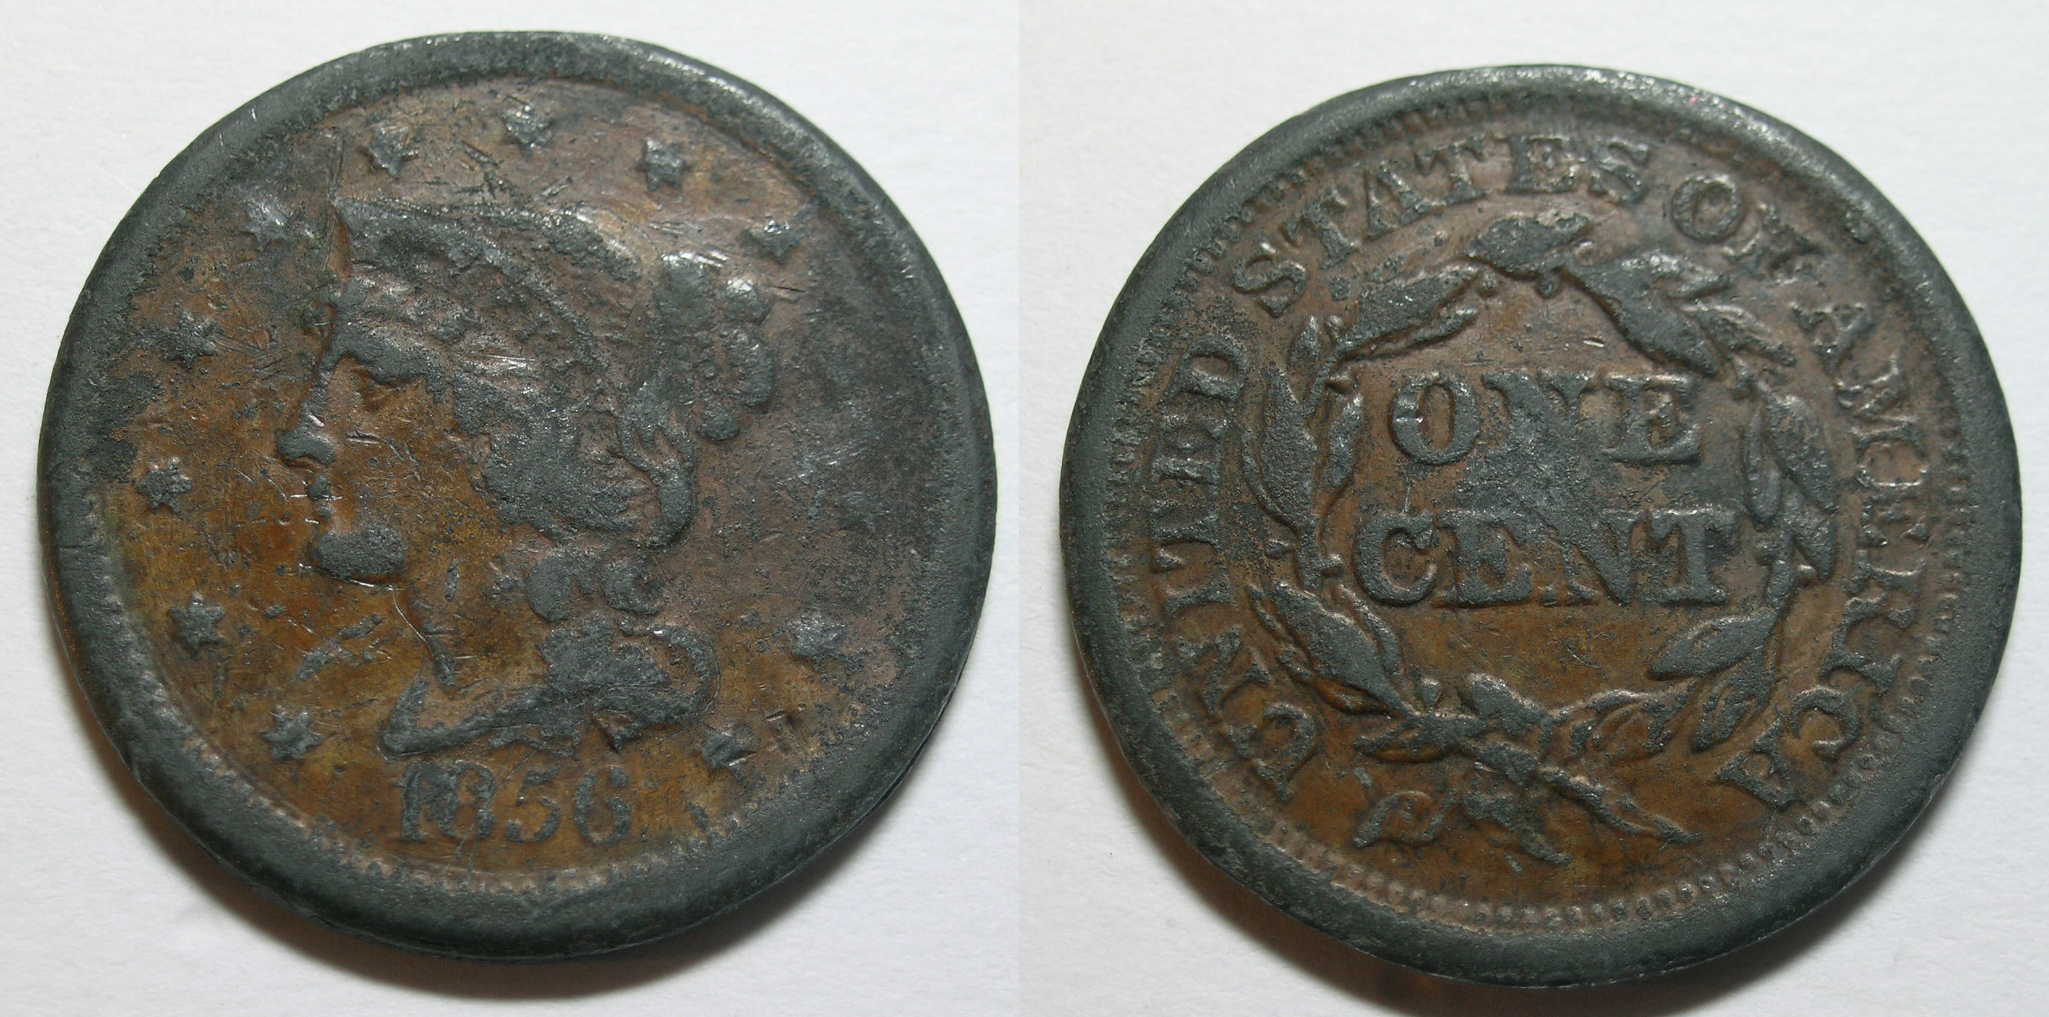 1856 counterfeit.jpg